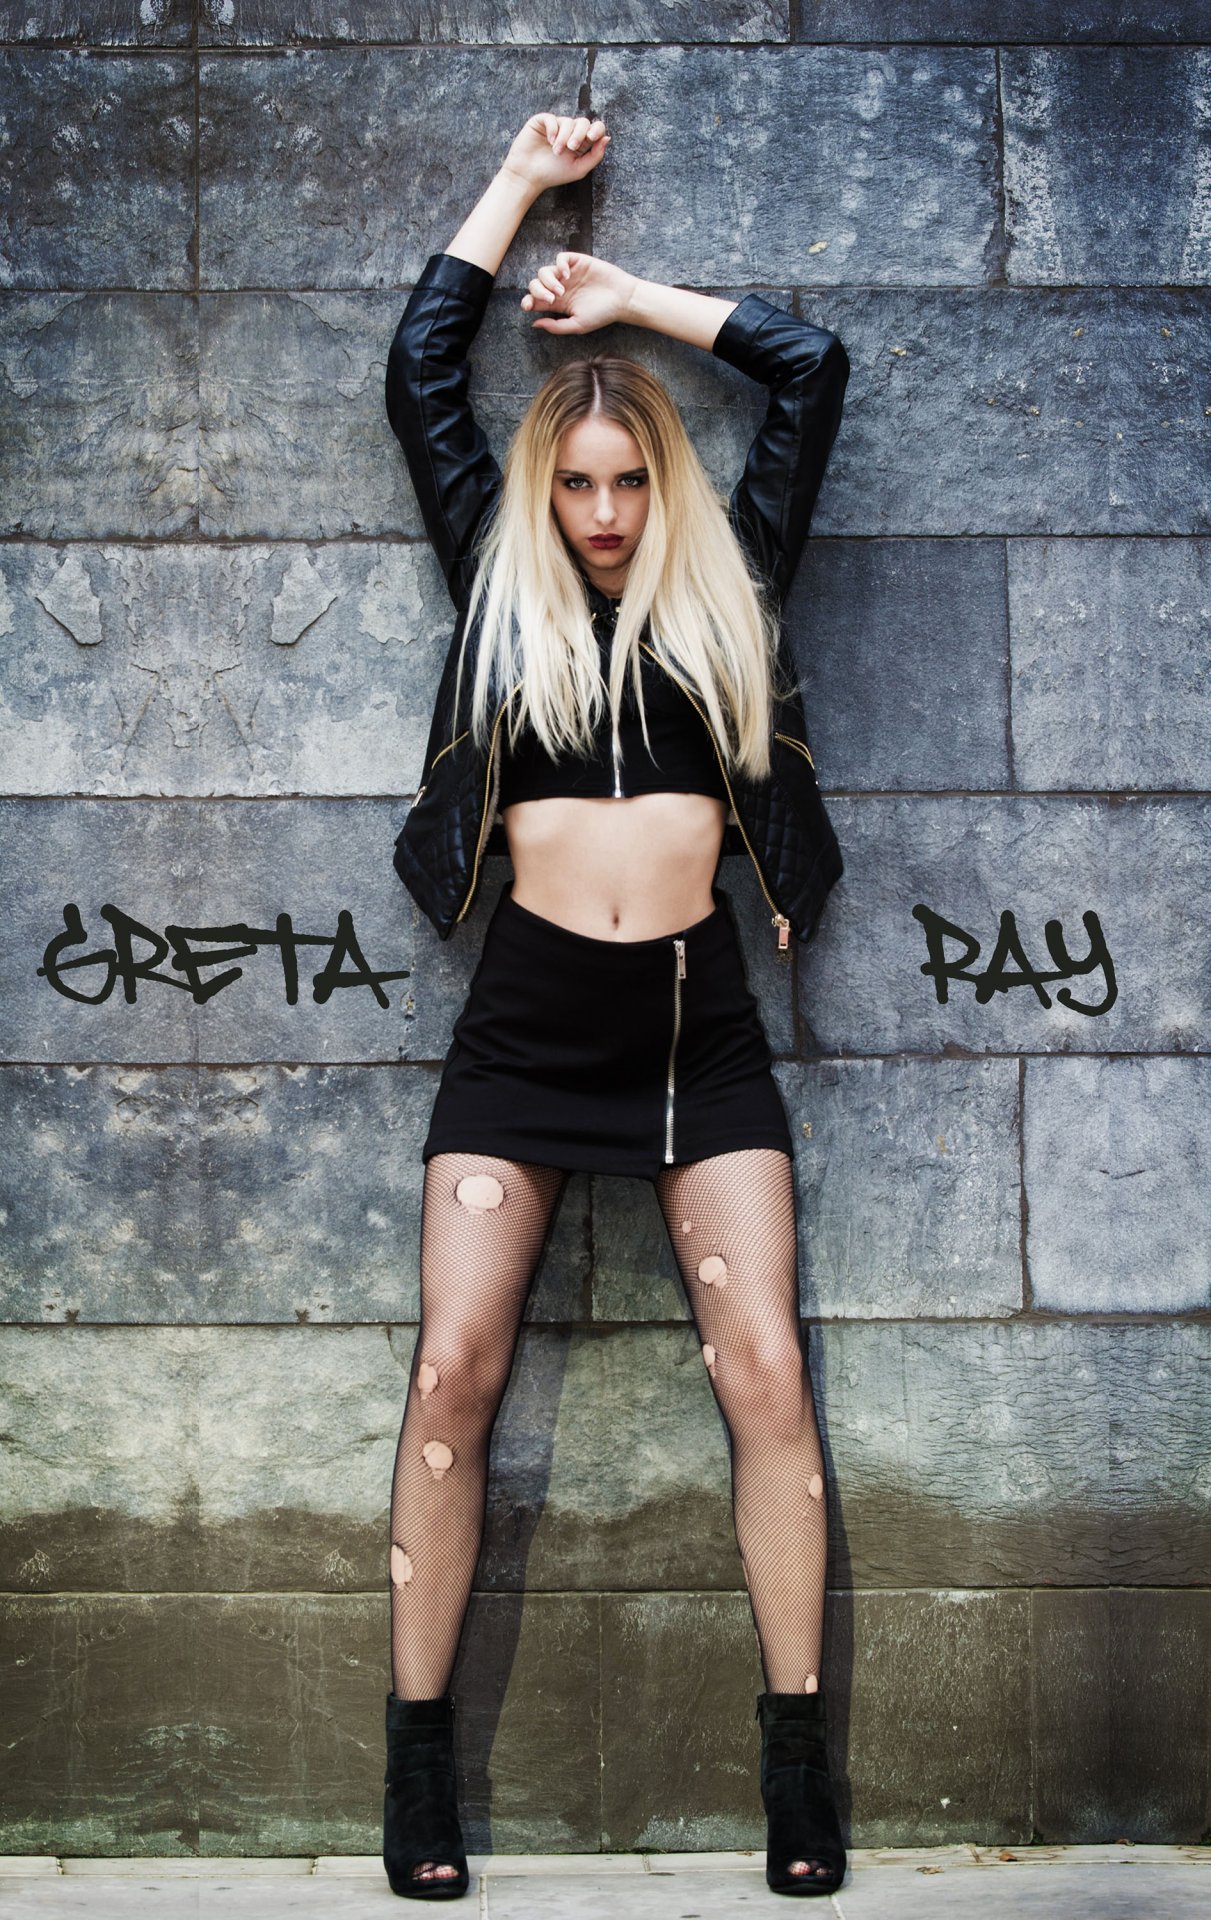 Greata Ray Model - Milan Rock Street 2016 2